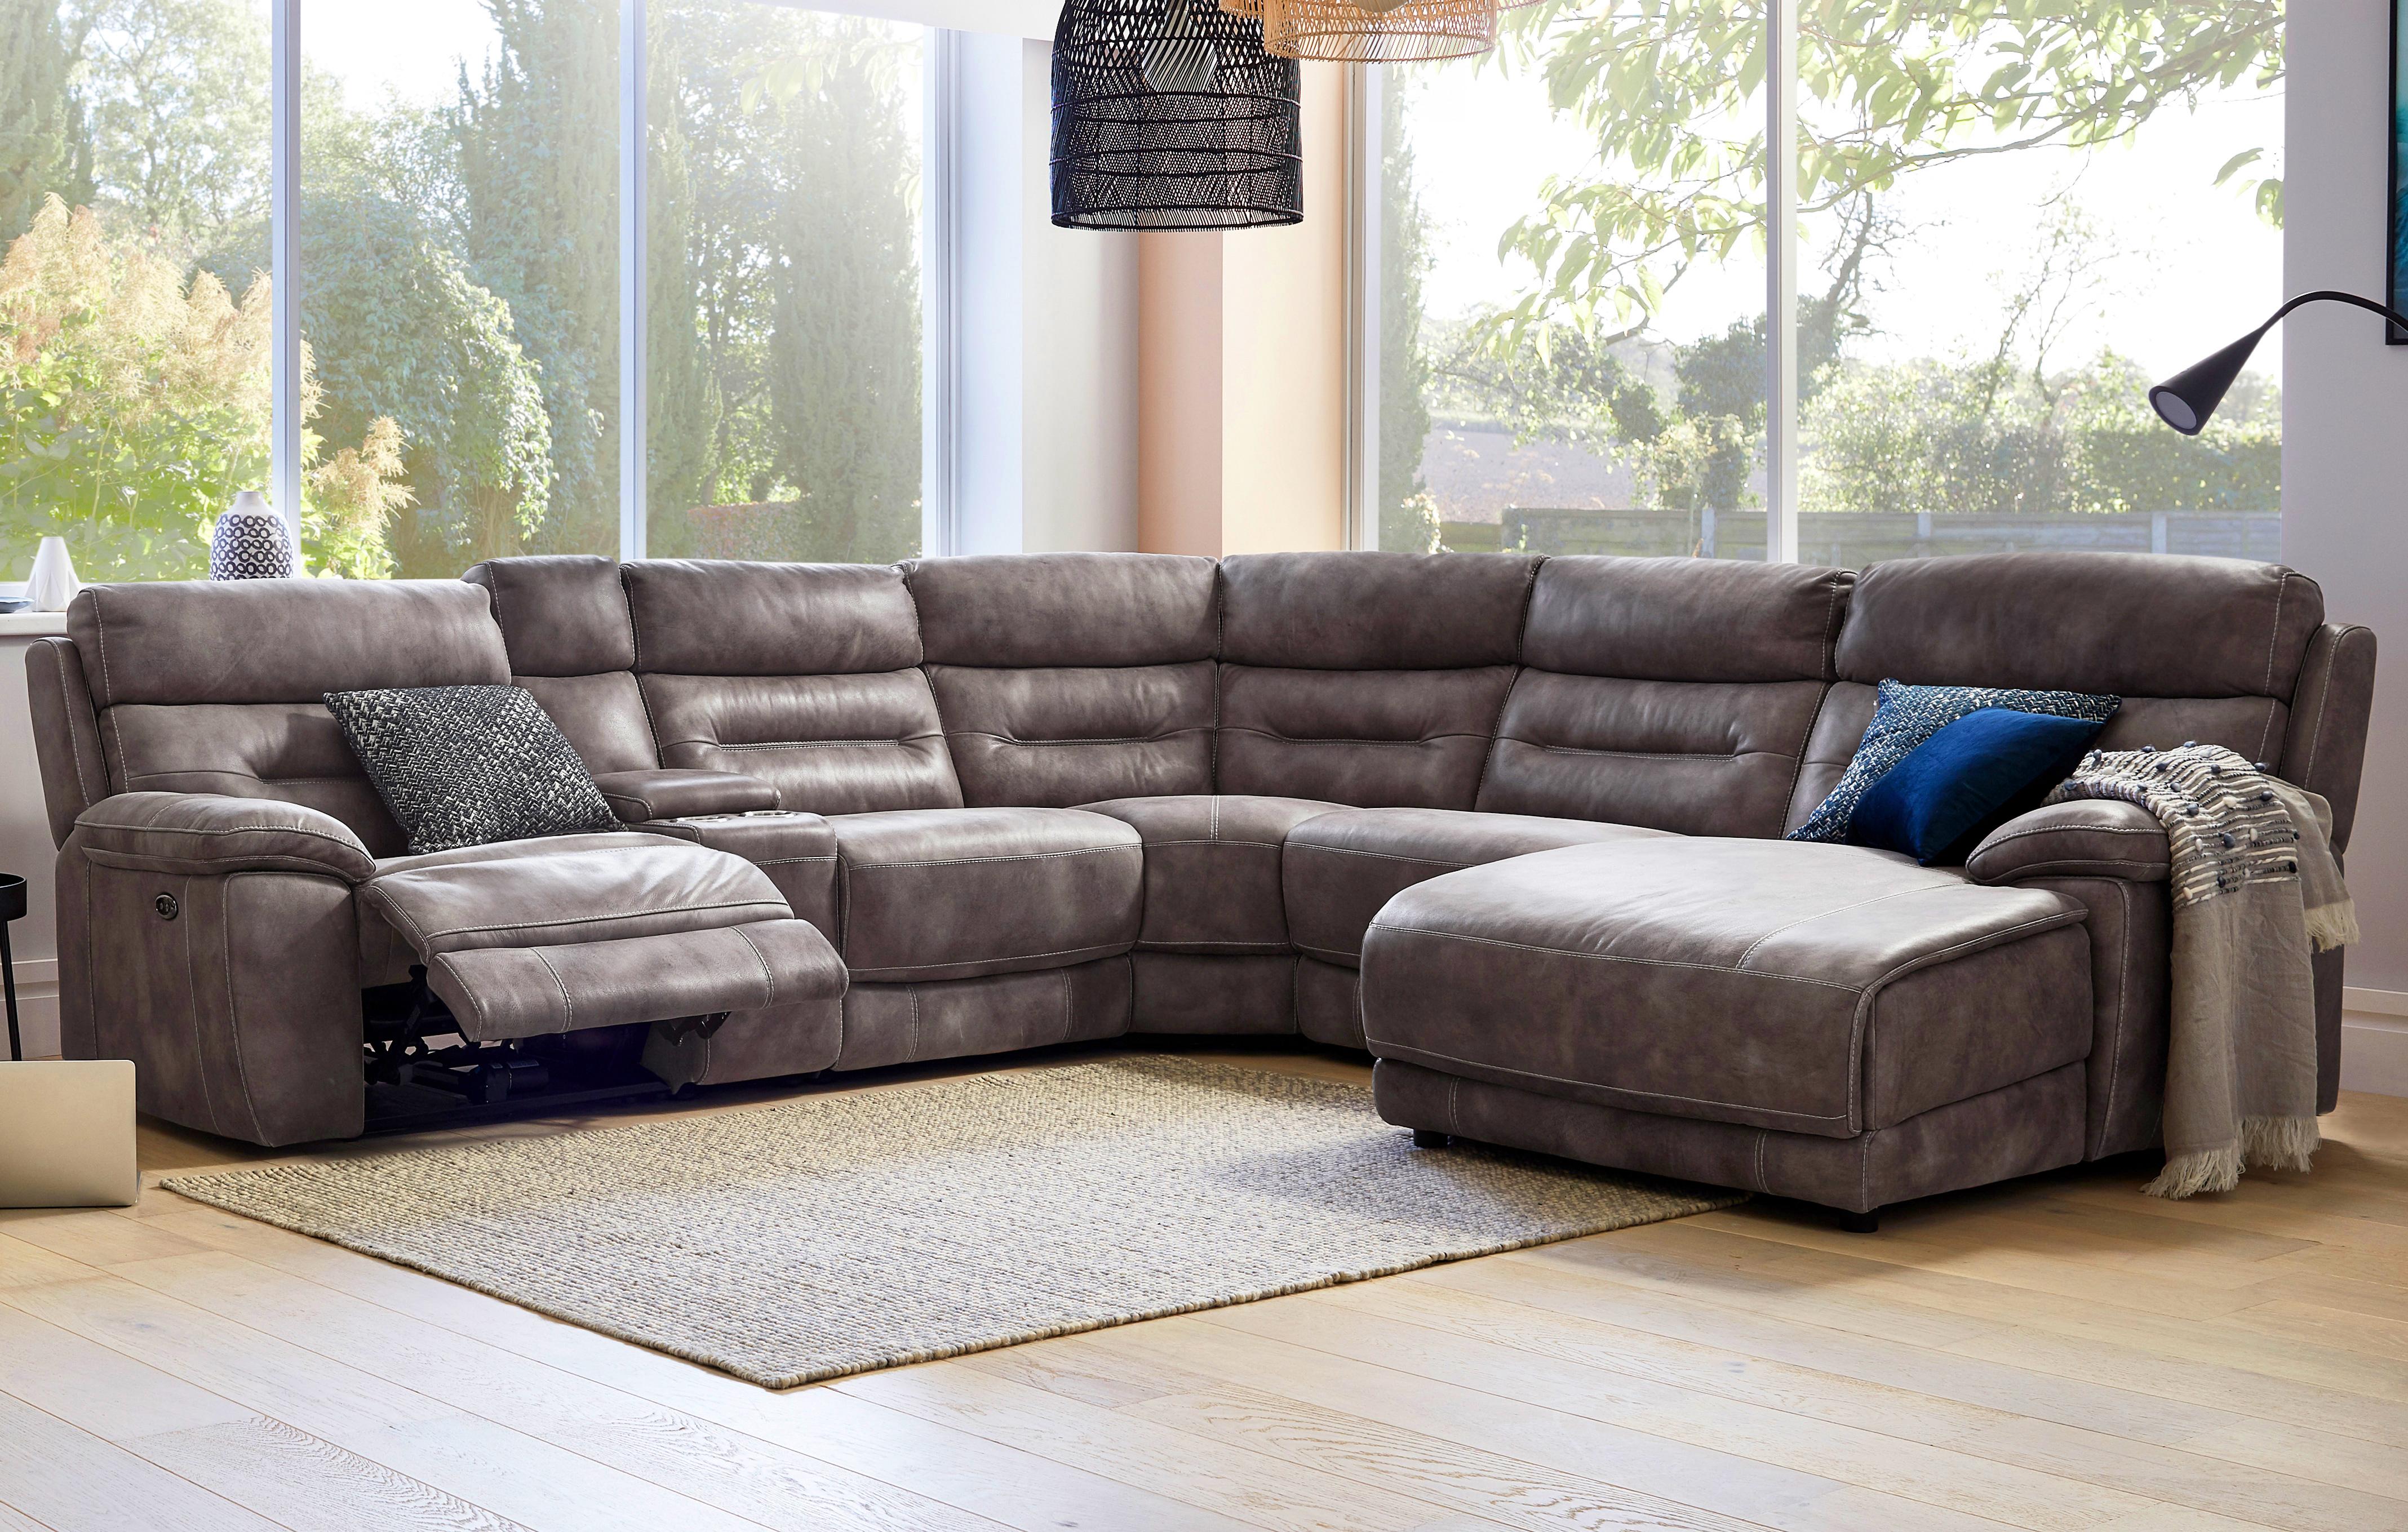 DFS DFS corner sofa with inclining single sofa 